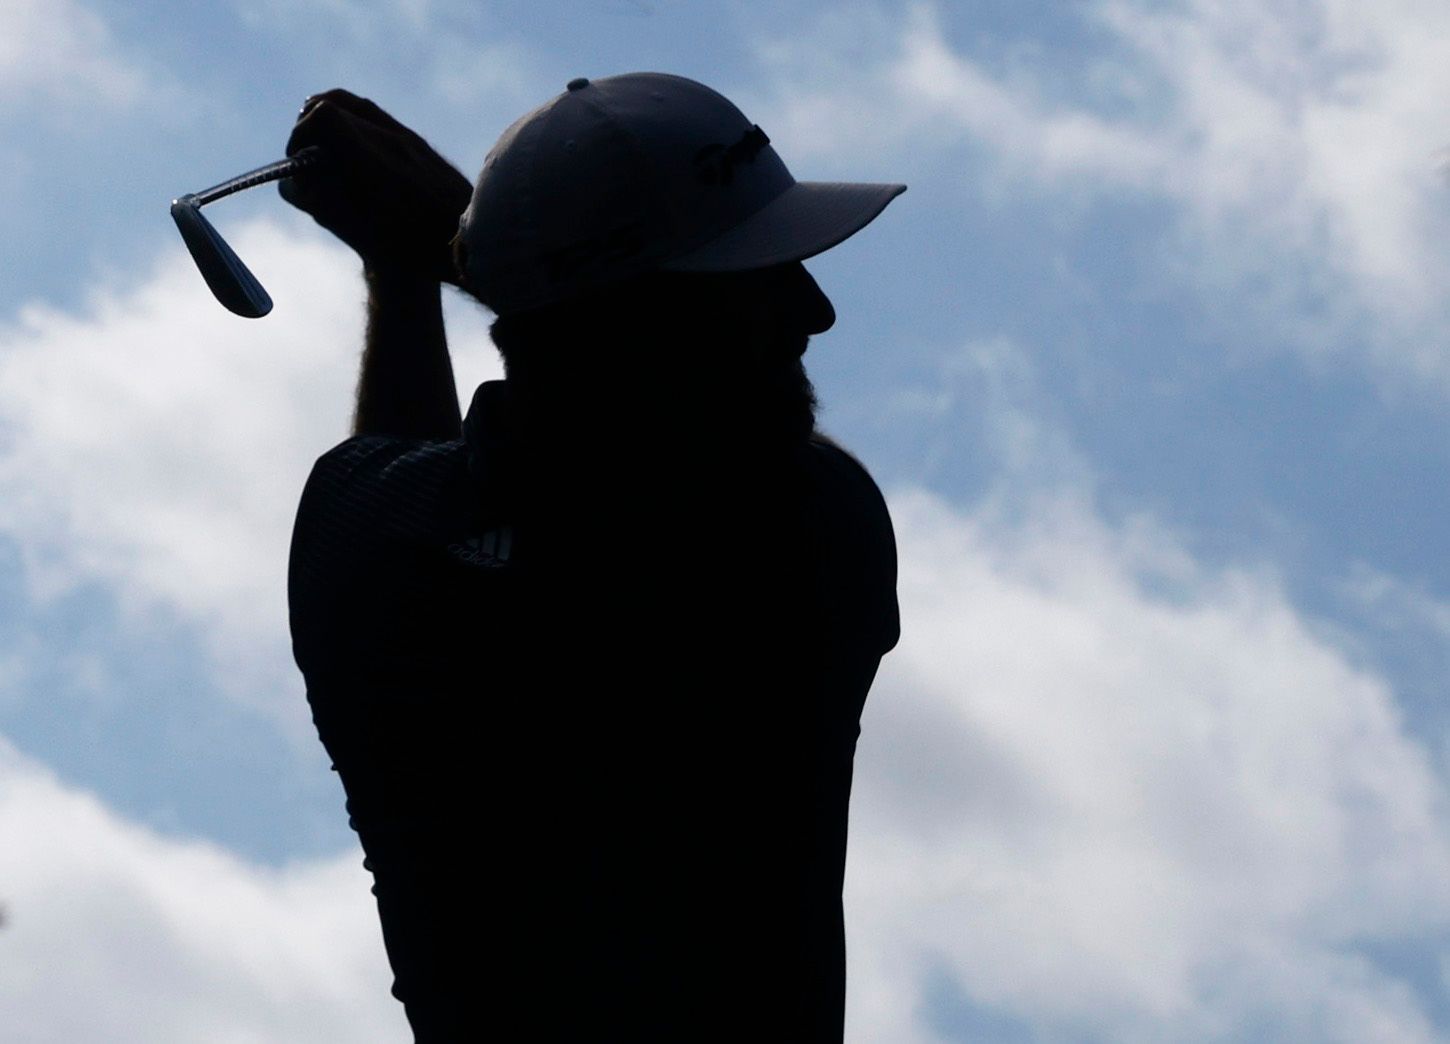 golf, The Masters, Dustin Johnson